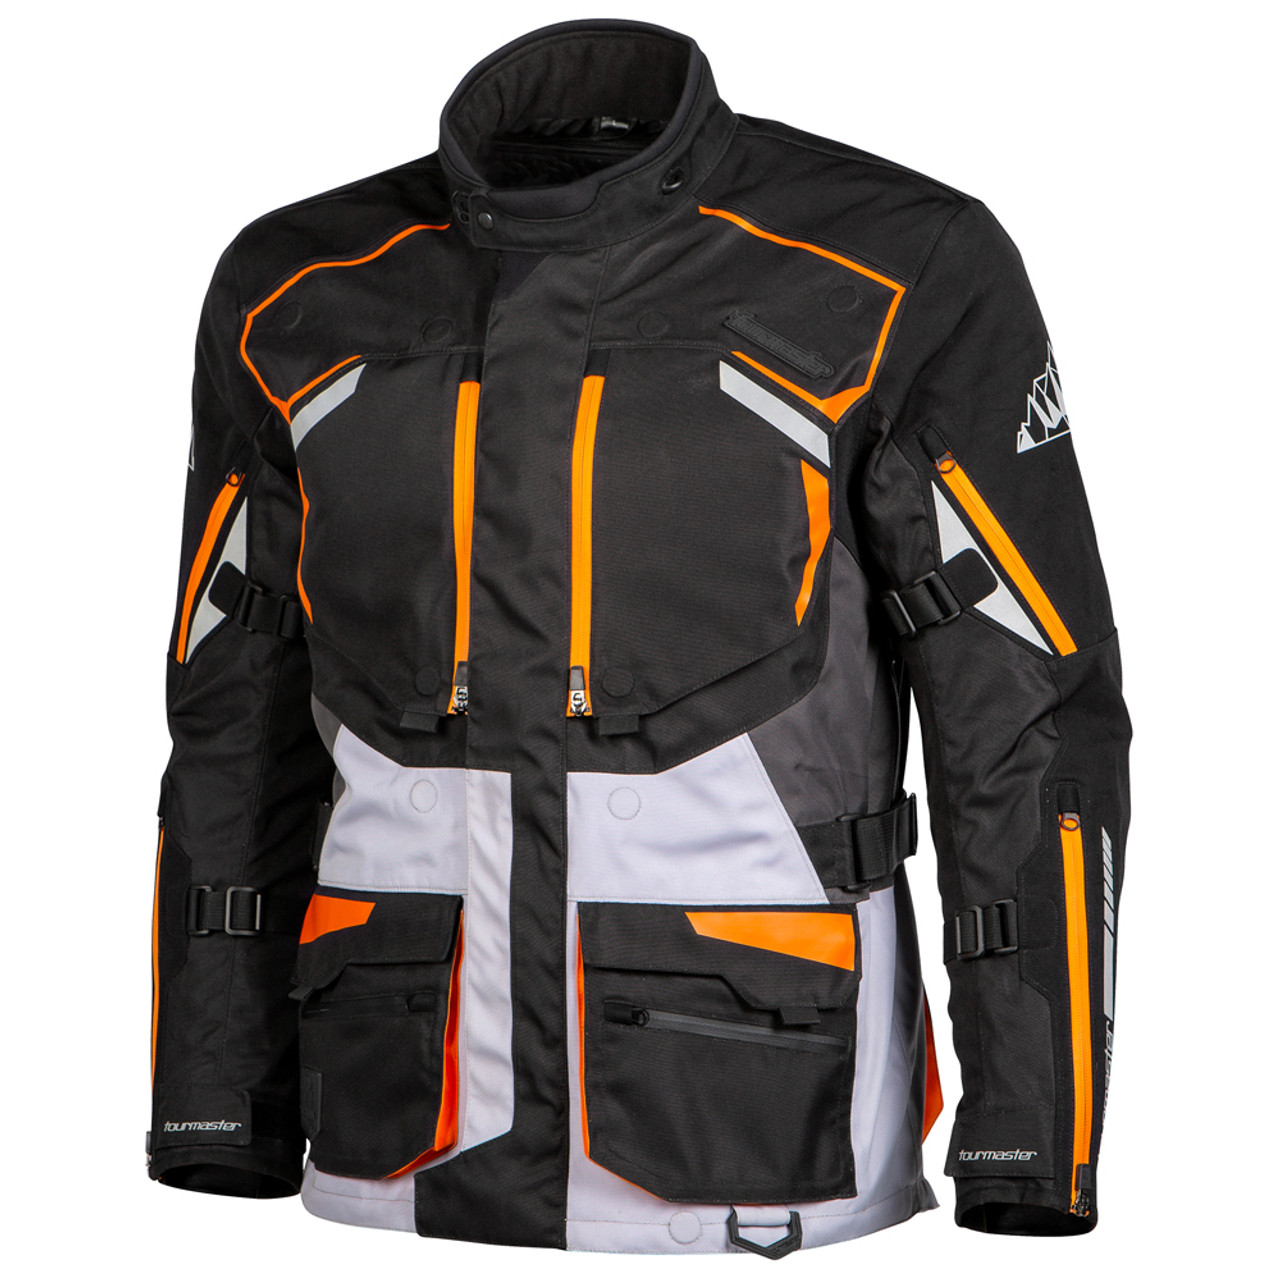 Tourmaster Highlander Waterproof Jacket - Sportbike Track Gear